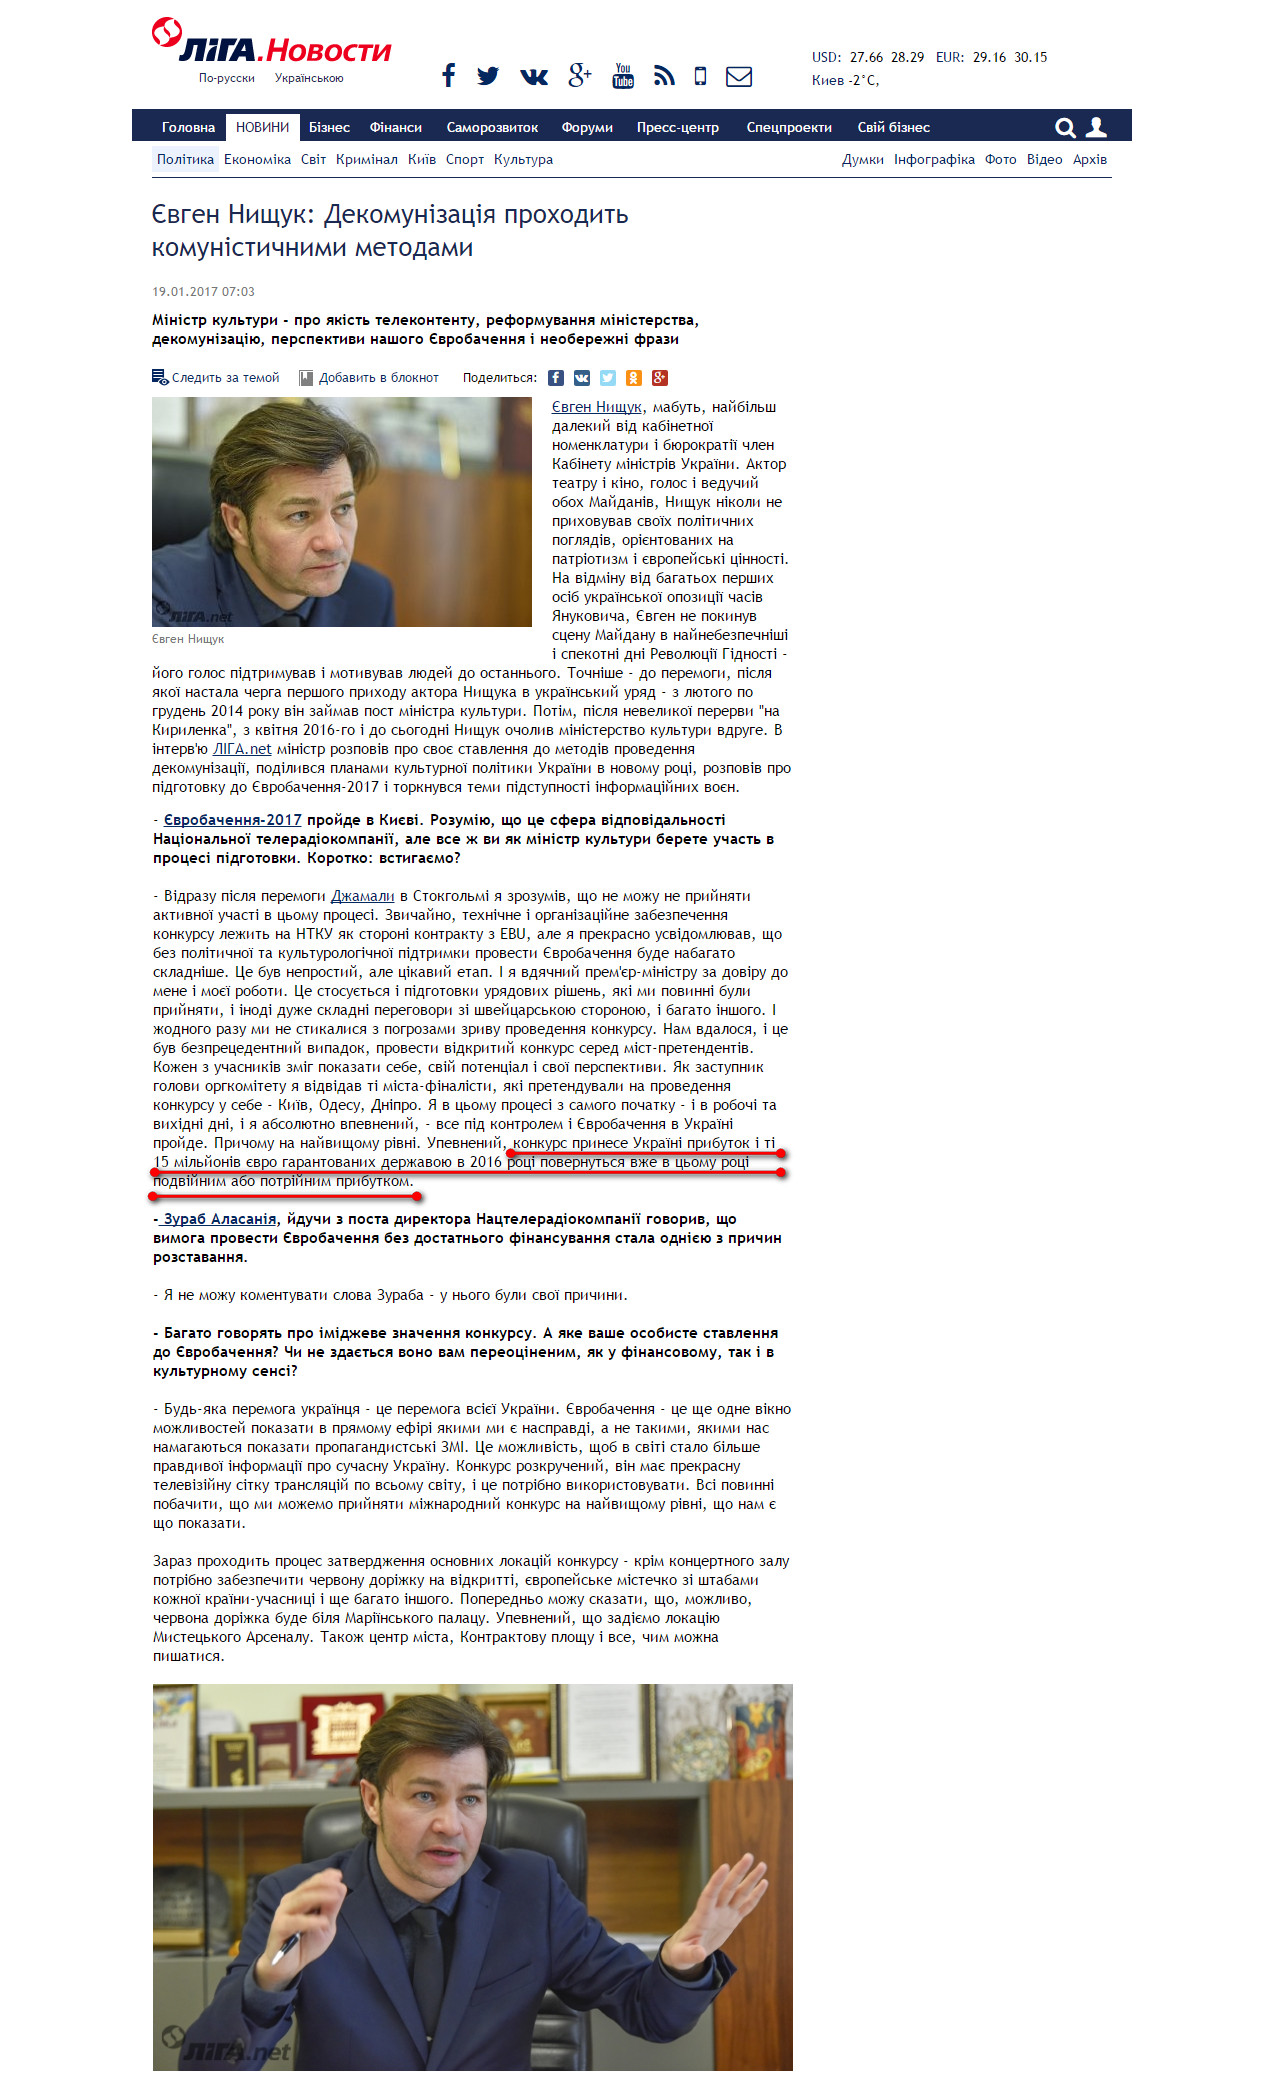 http://news.liga.net/ua/interview/politics/14673893-vgen_nishchuk_dekomun_zats_ya_prokhodit_komun_stichnimi_metodami.htm